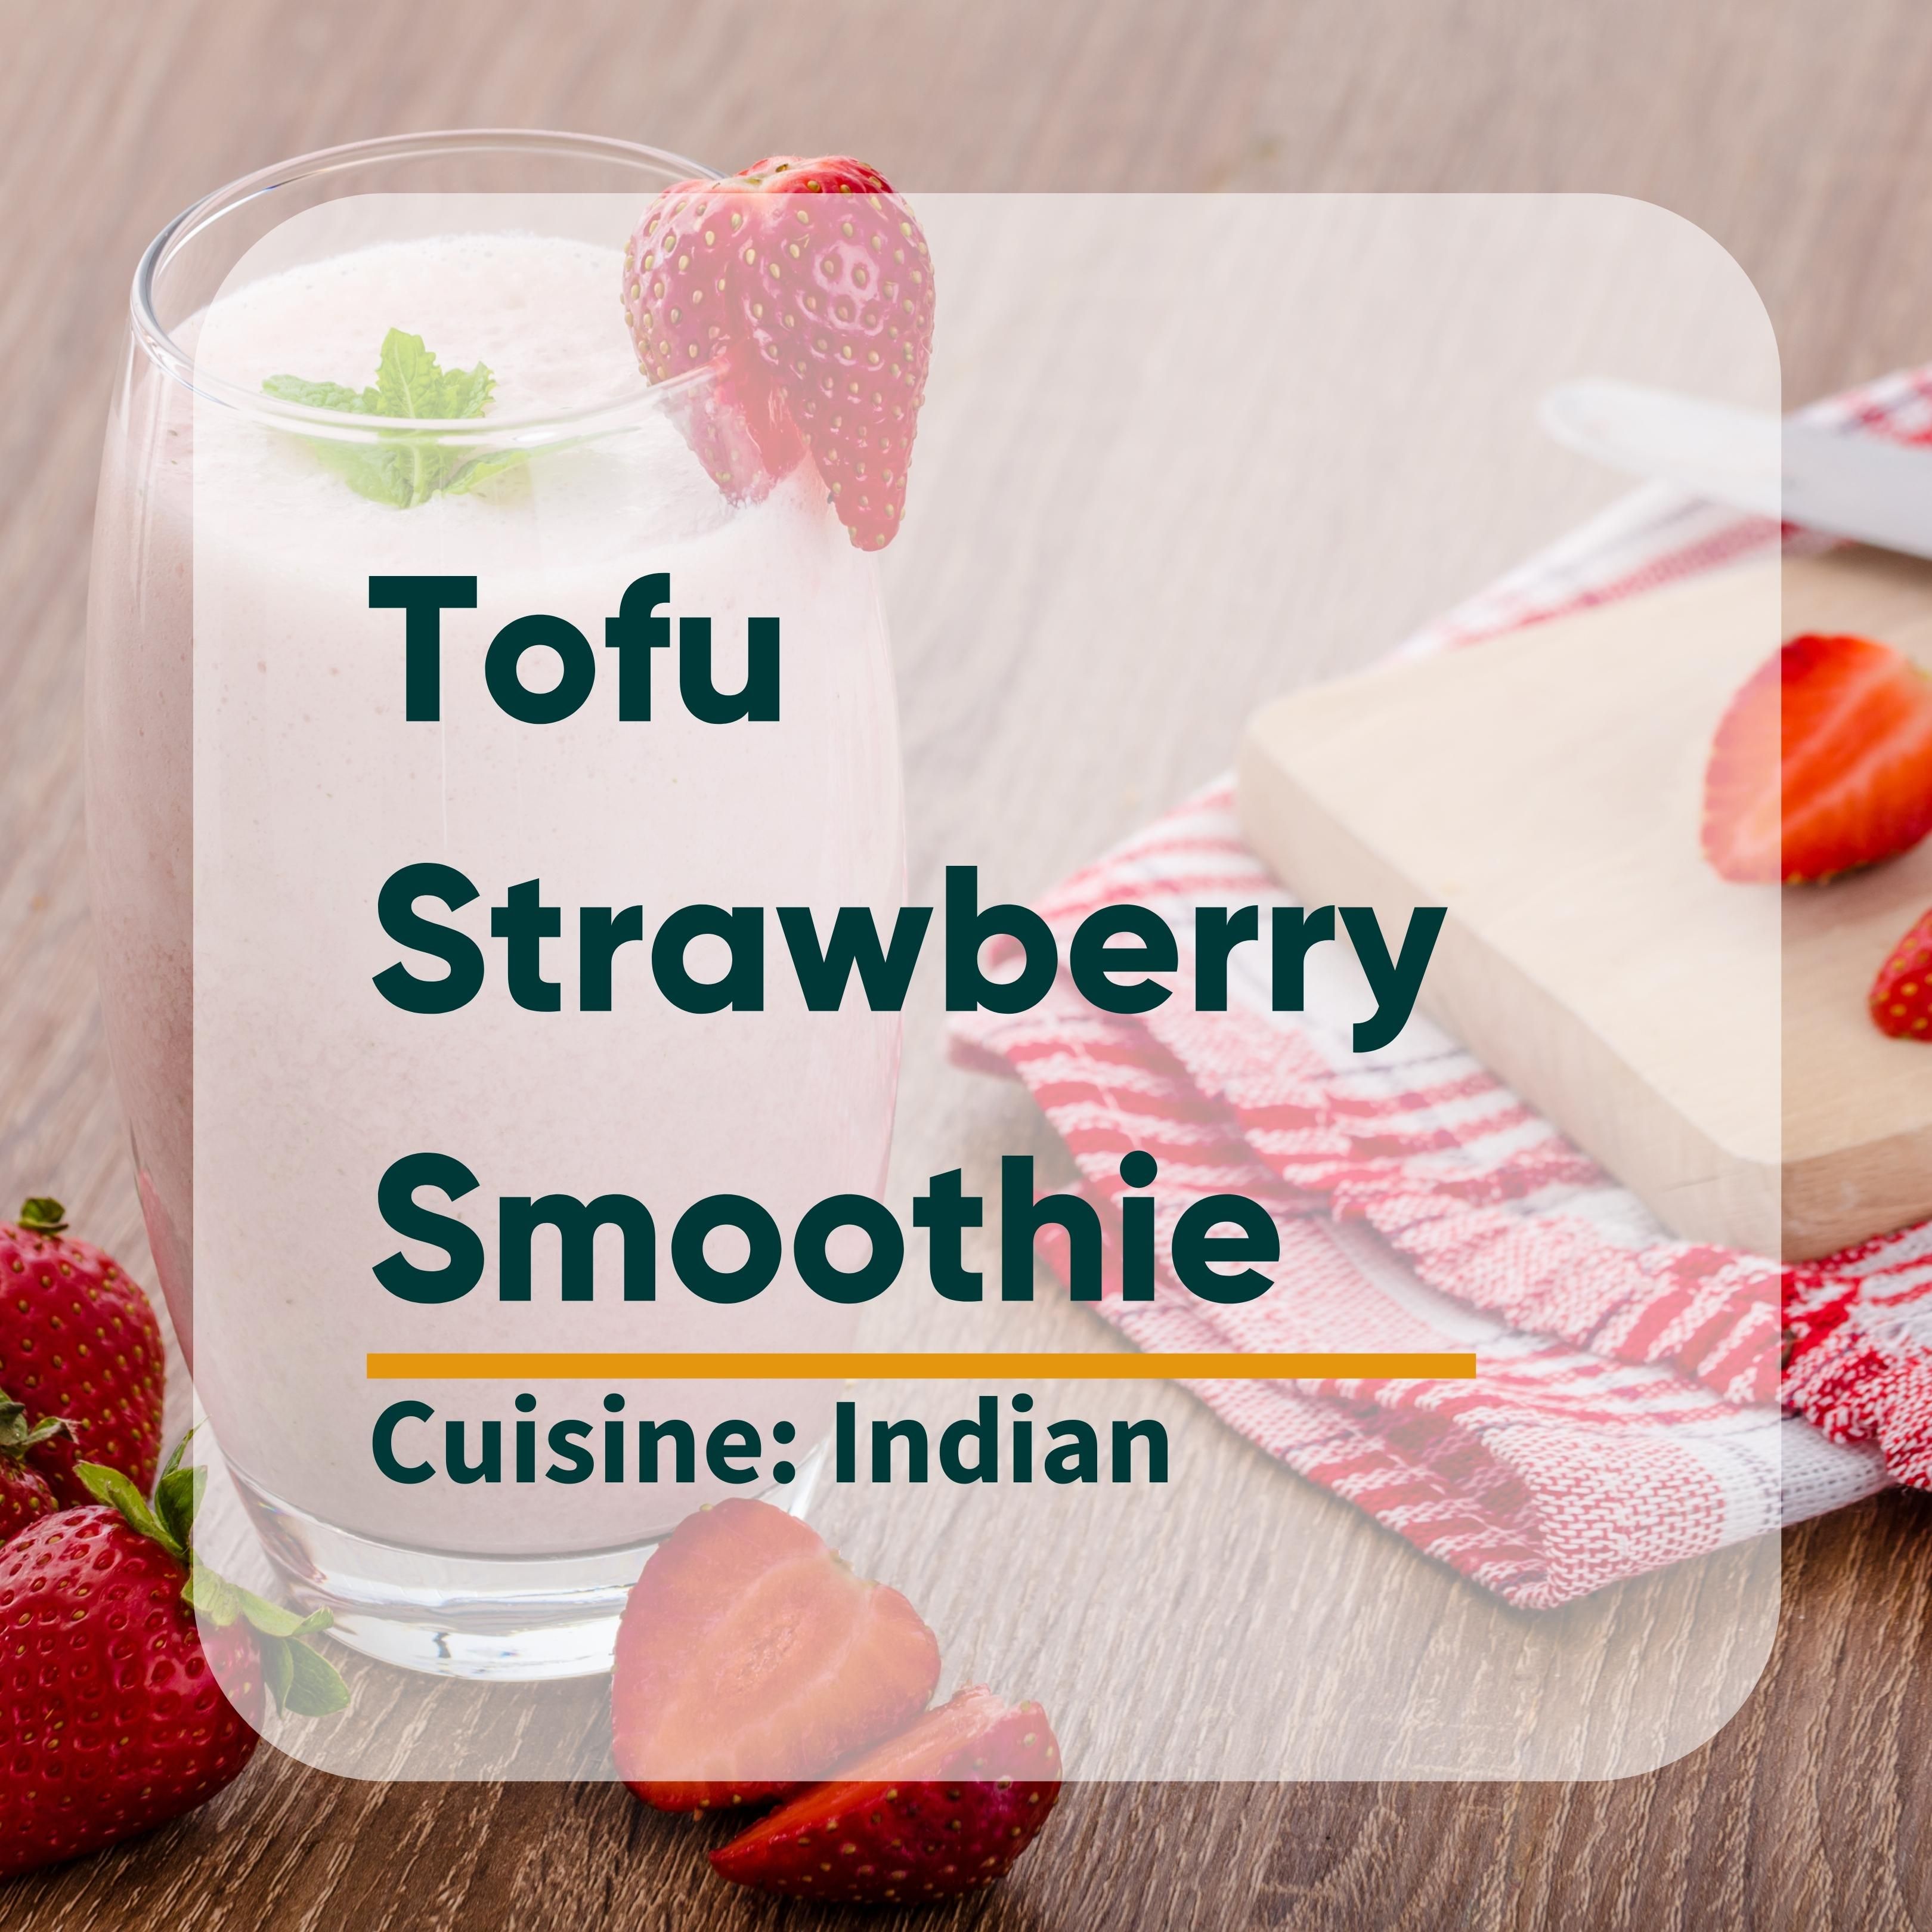 Tofu Strawberry Smoothie Image